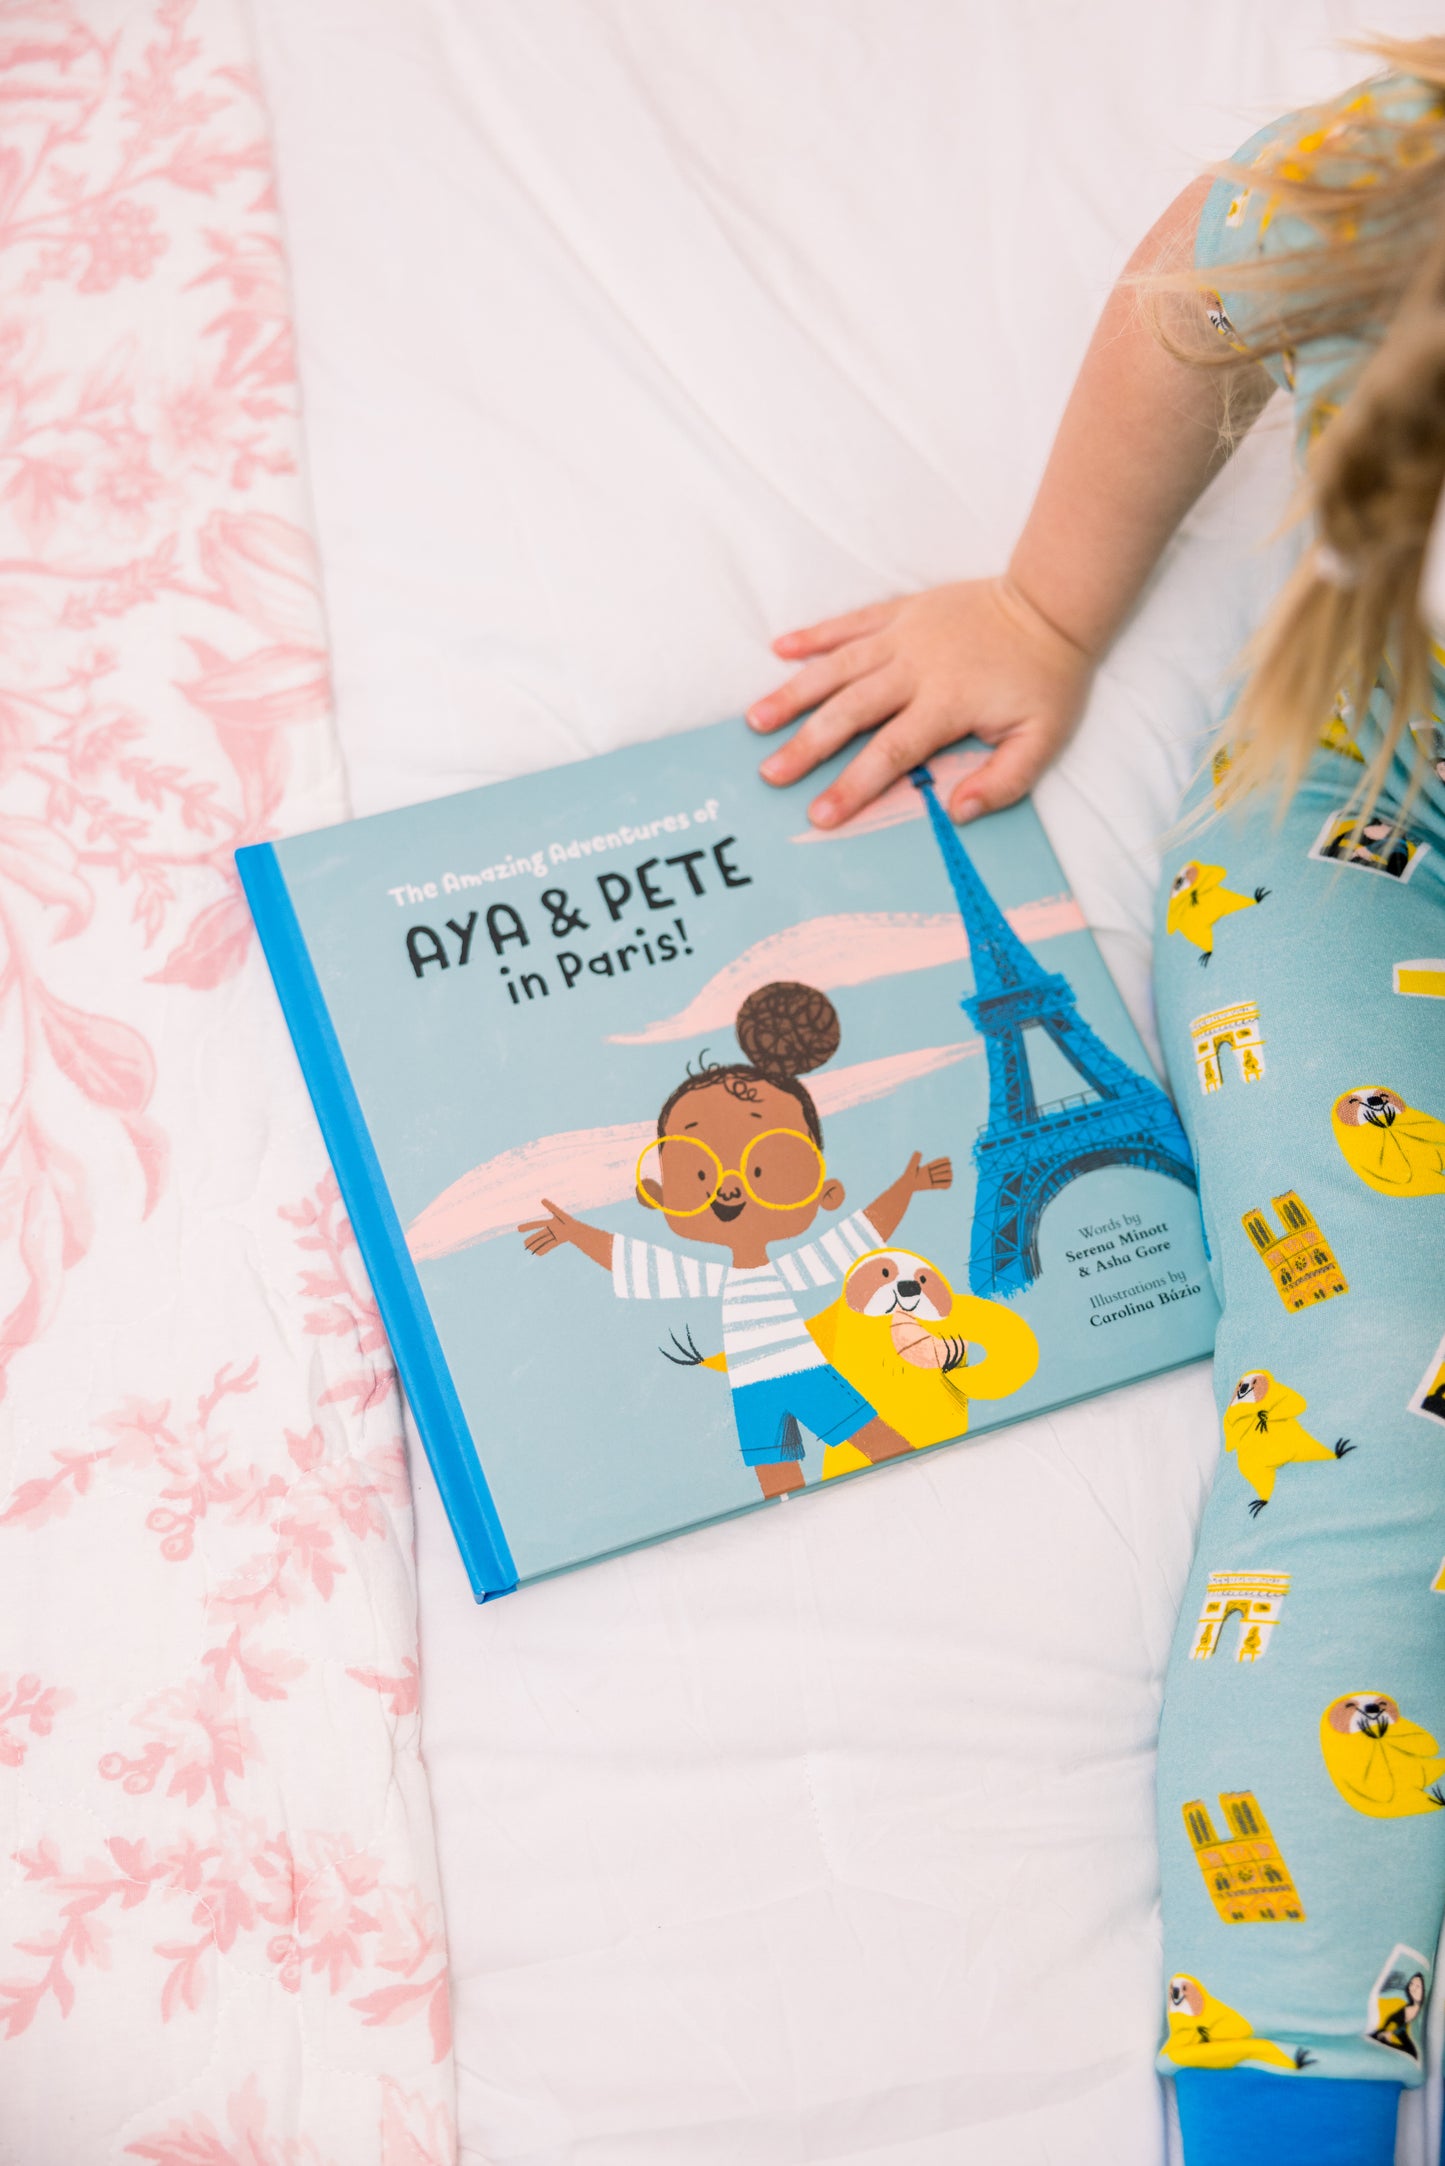 Aya & Pete in Paris x Nola Tawk Kids Pajamas & Book Set